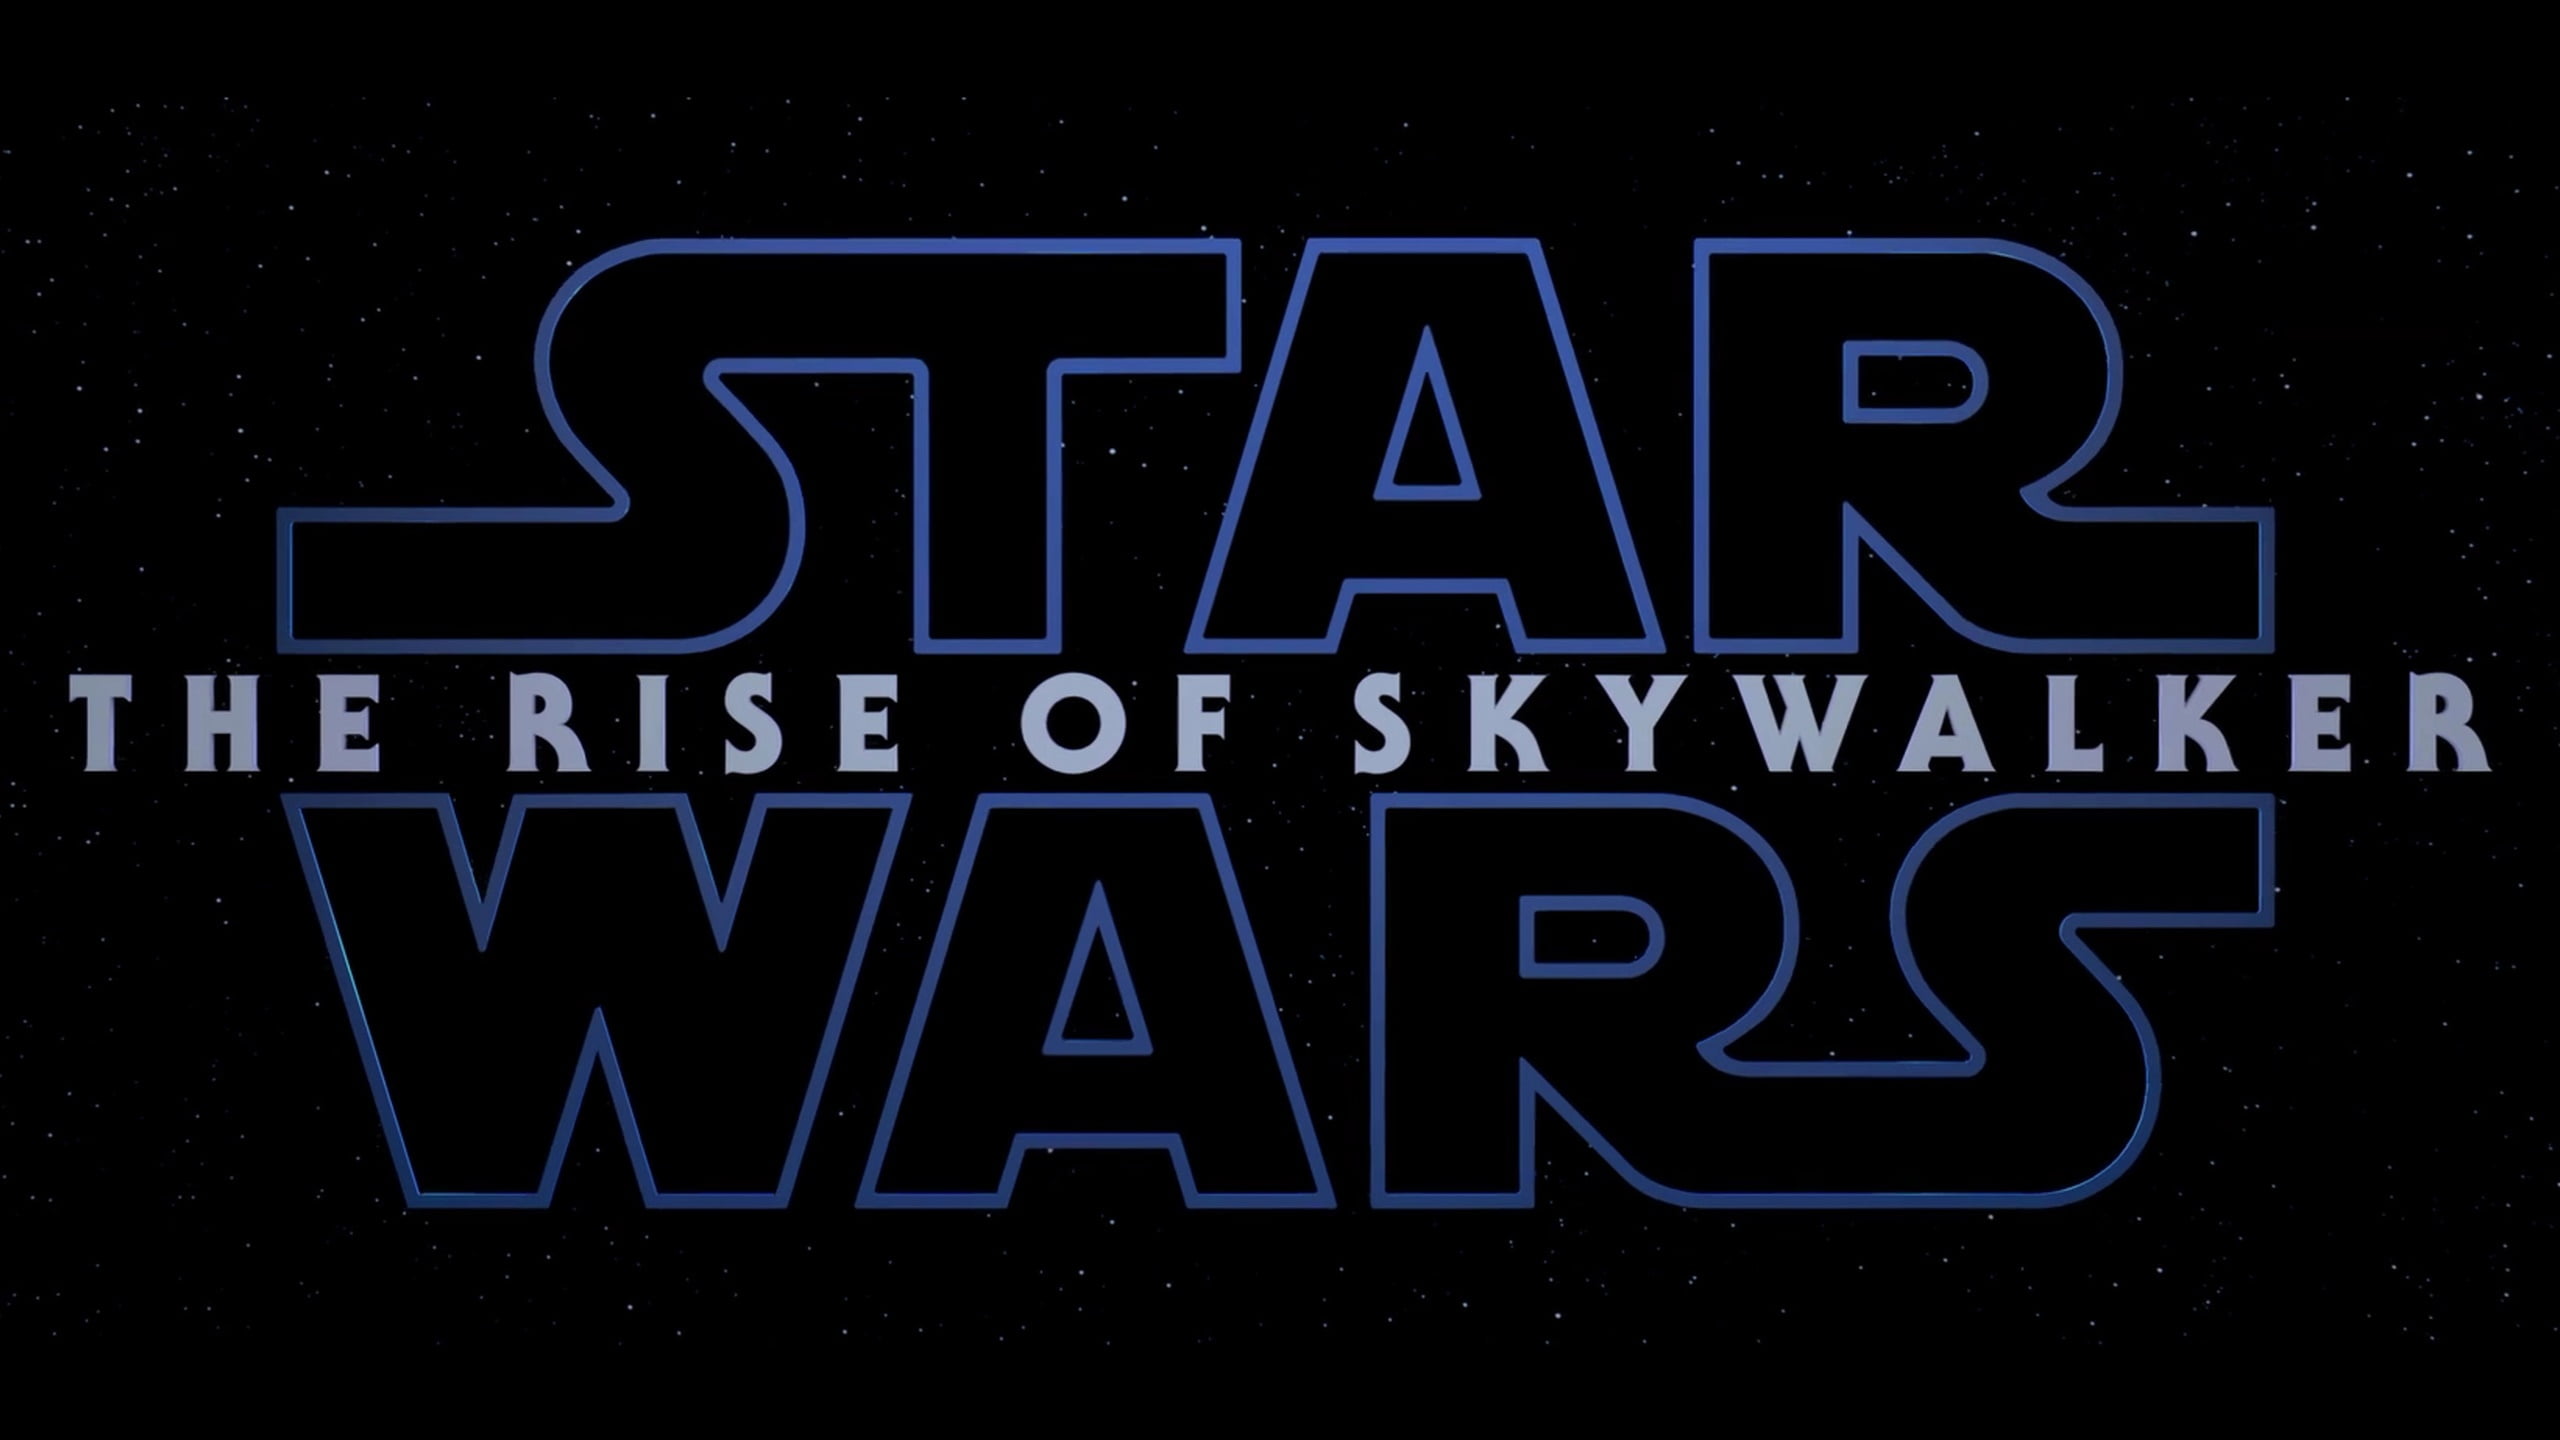 Star Wars, movies, Star Wars: Episode IX - The Rise of Skywalker